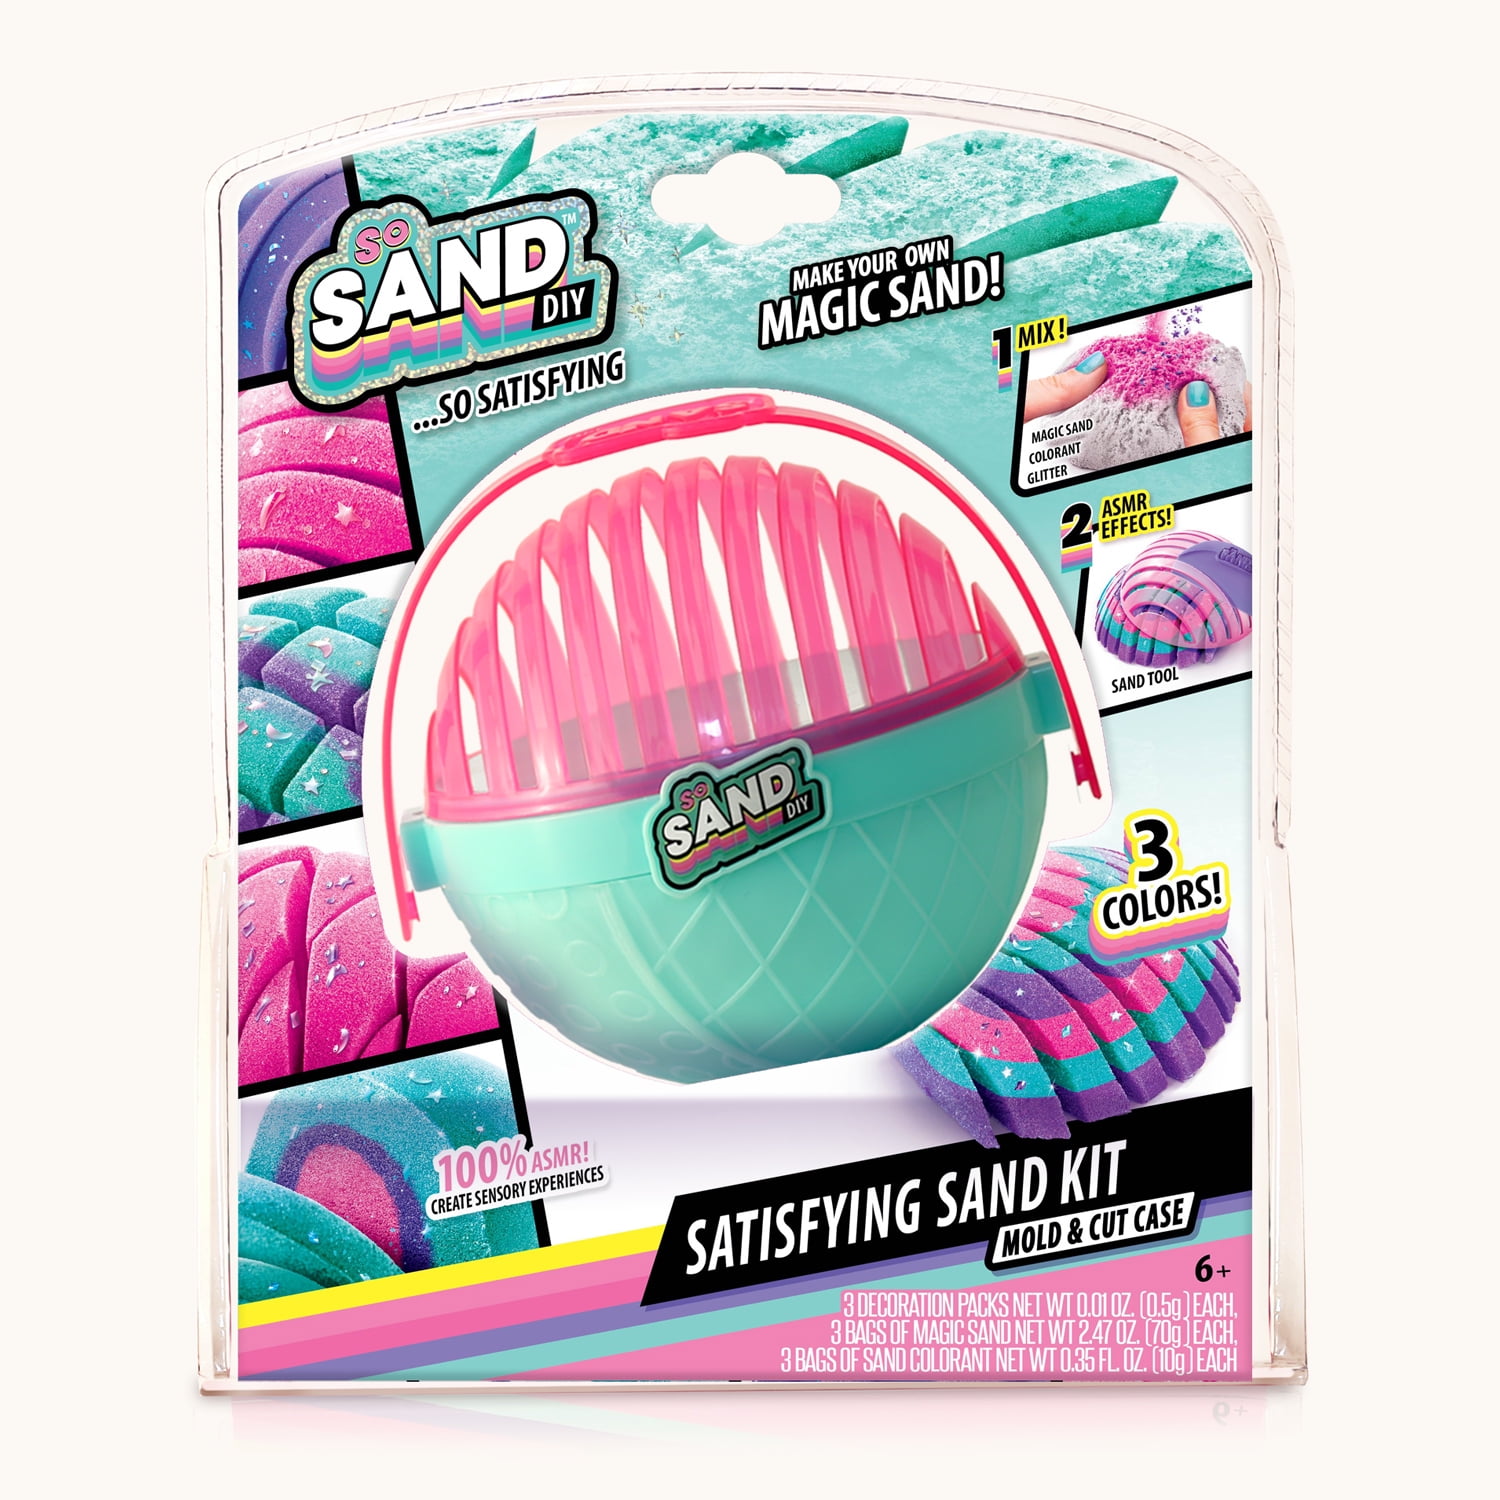 So Sand Diy Asmr Satisfying Sand Ball Shaped Case Kit Walmart Com